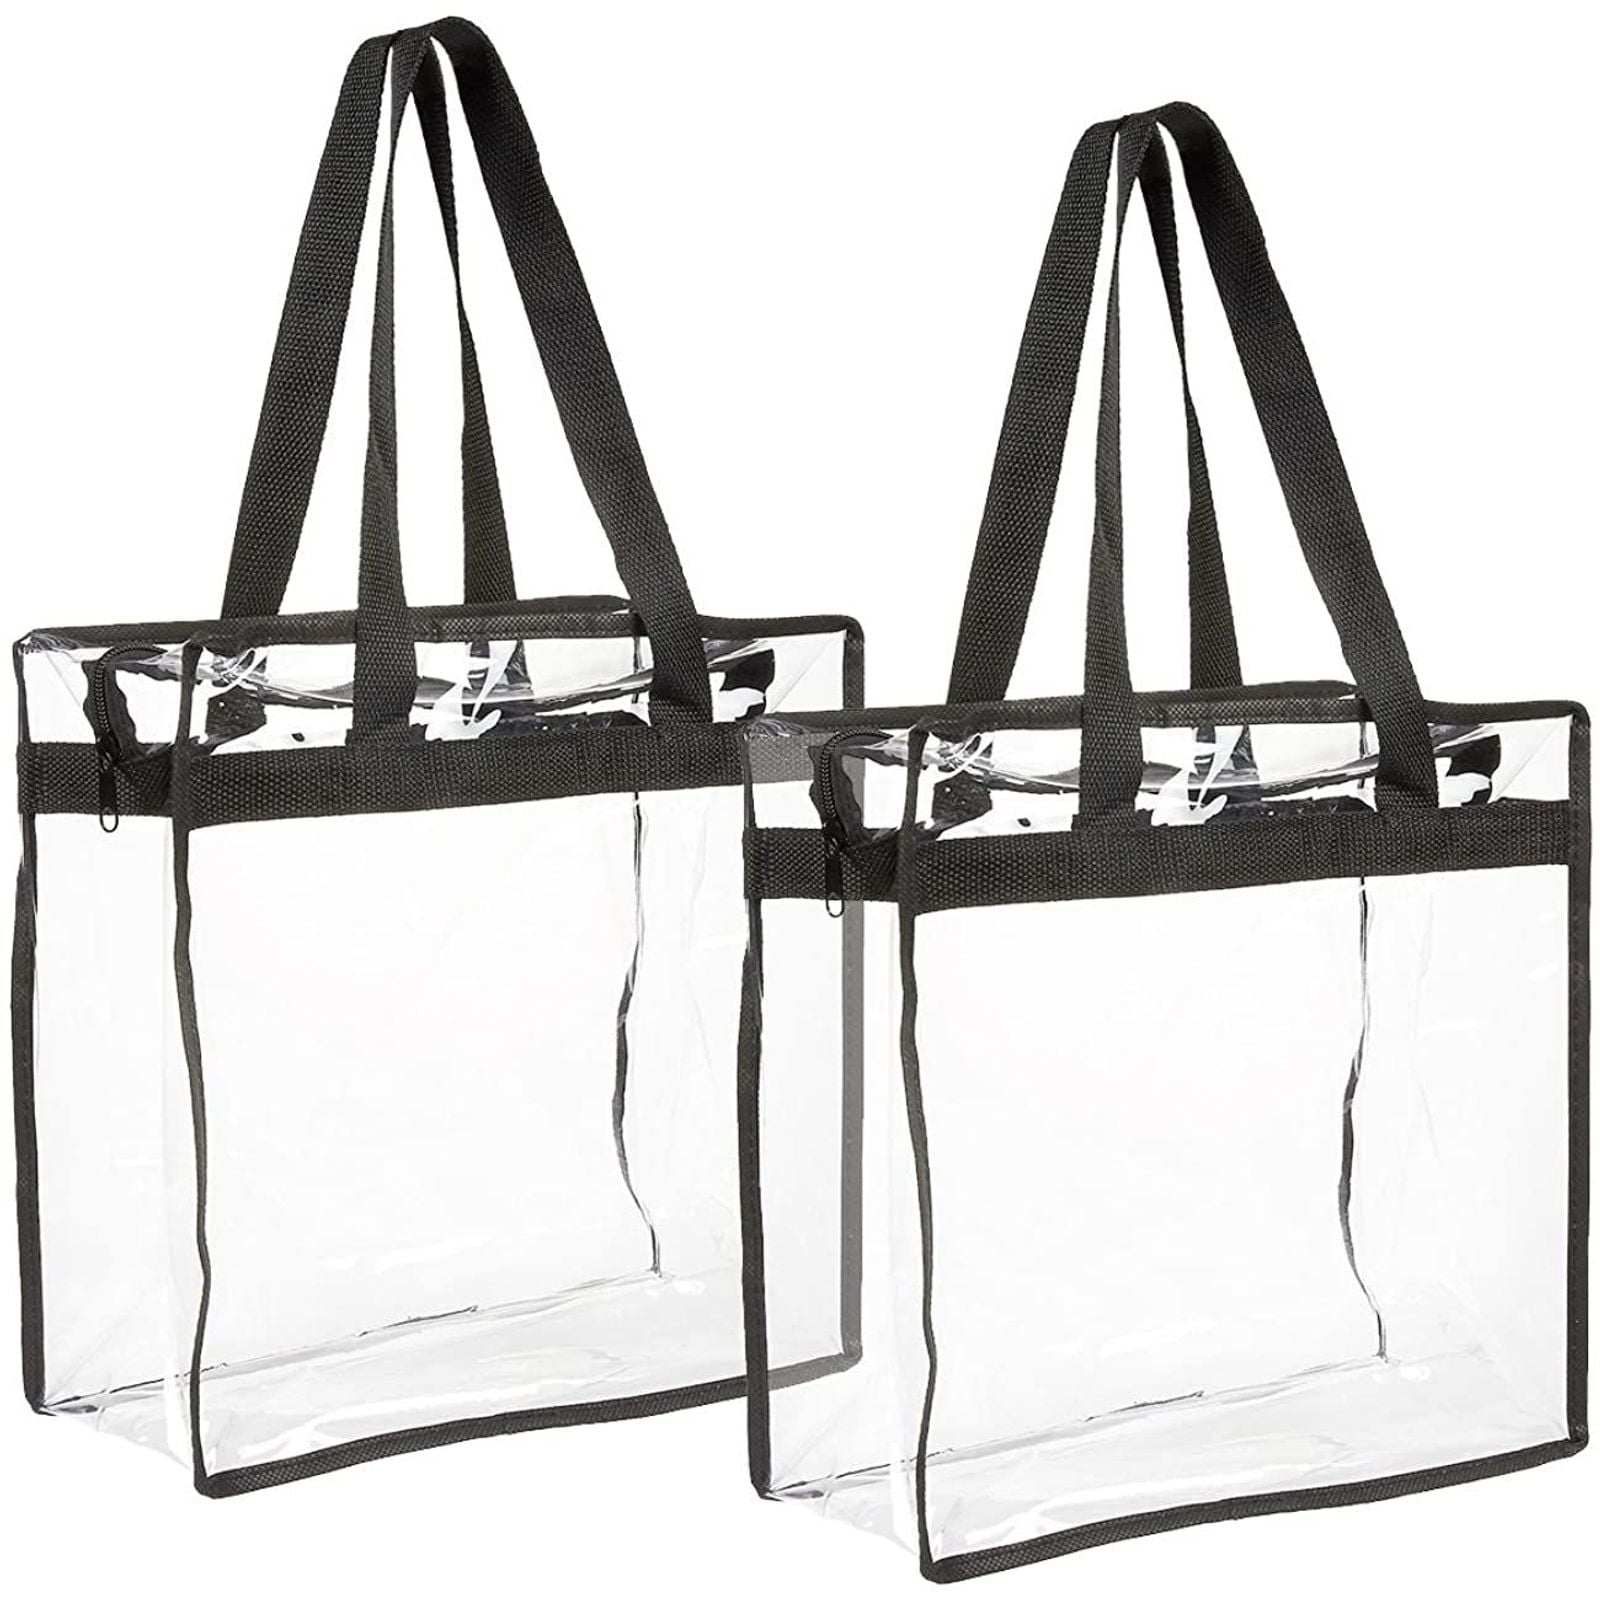 Ruimin 1PC Clear Stadium Tote Bag PVC Transparent Shoulder Handbags Travel Beach Bag 